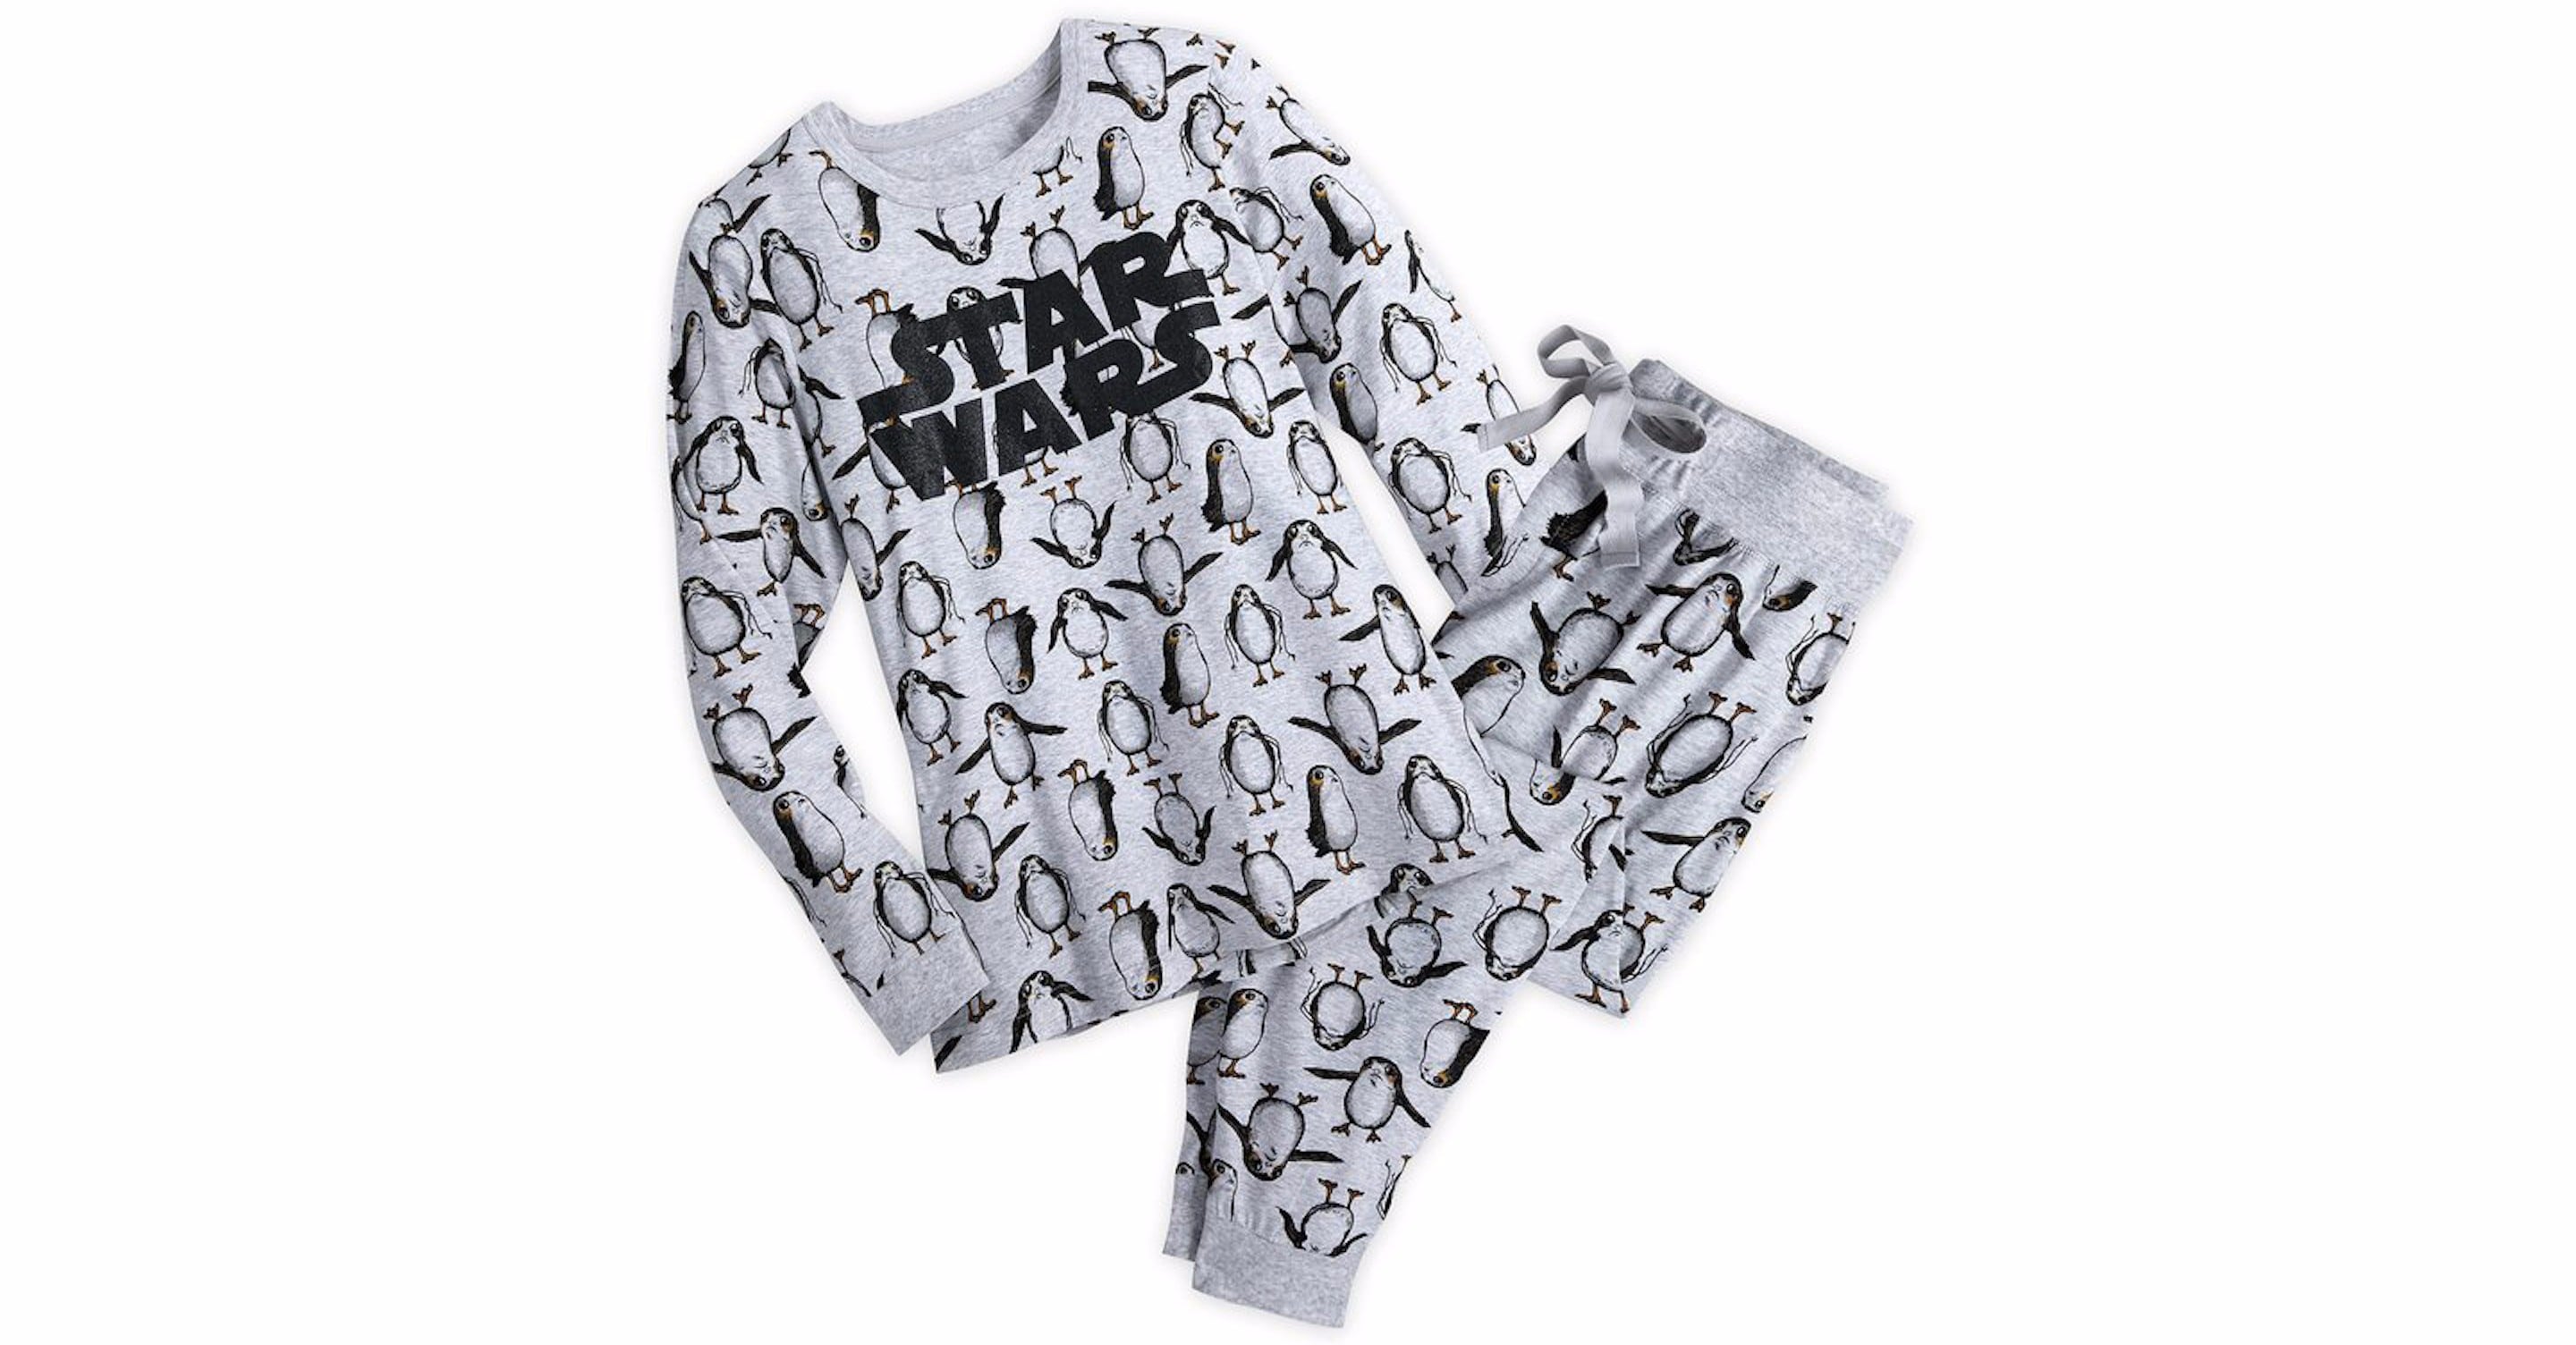 16 of the coolest Star Wars stocking stuffers for kids, Last Jedi